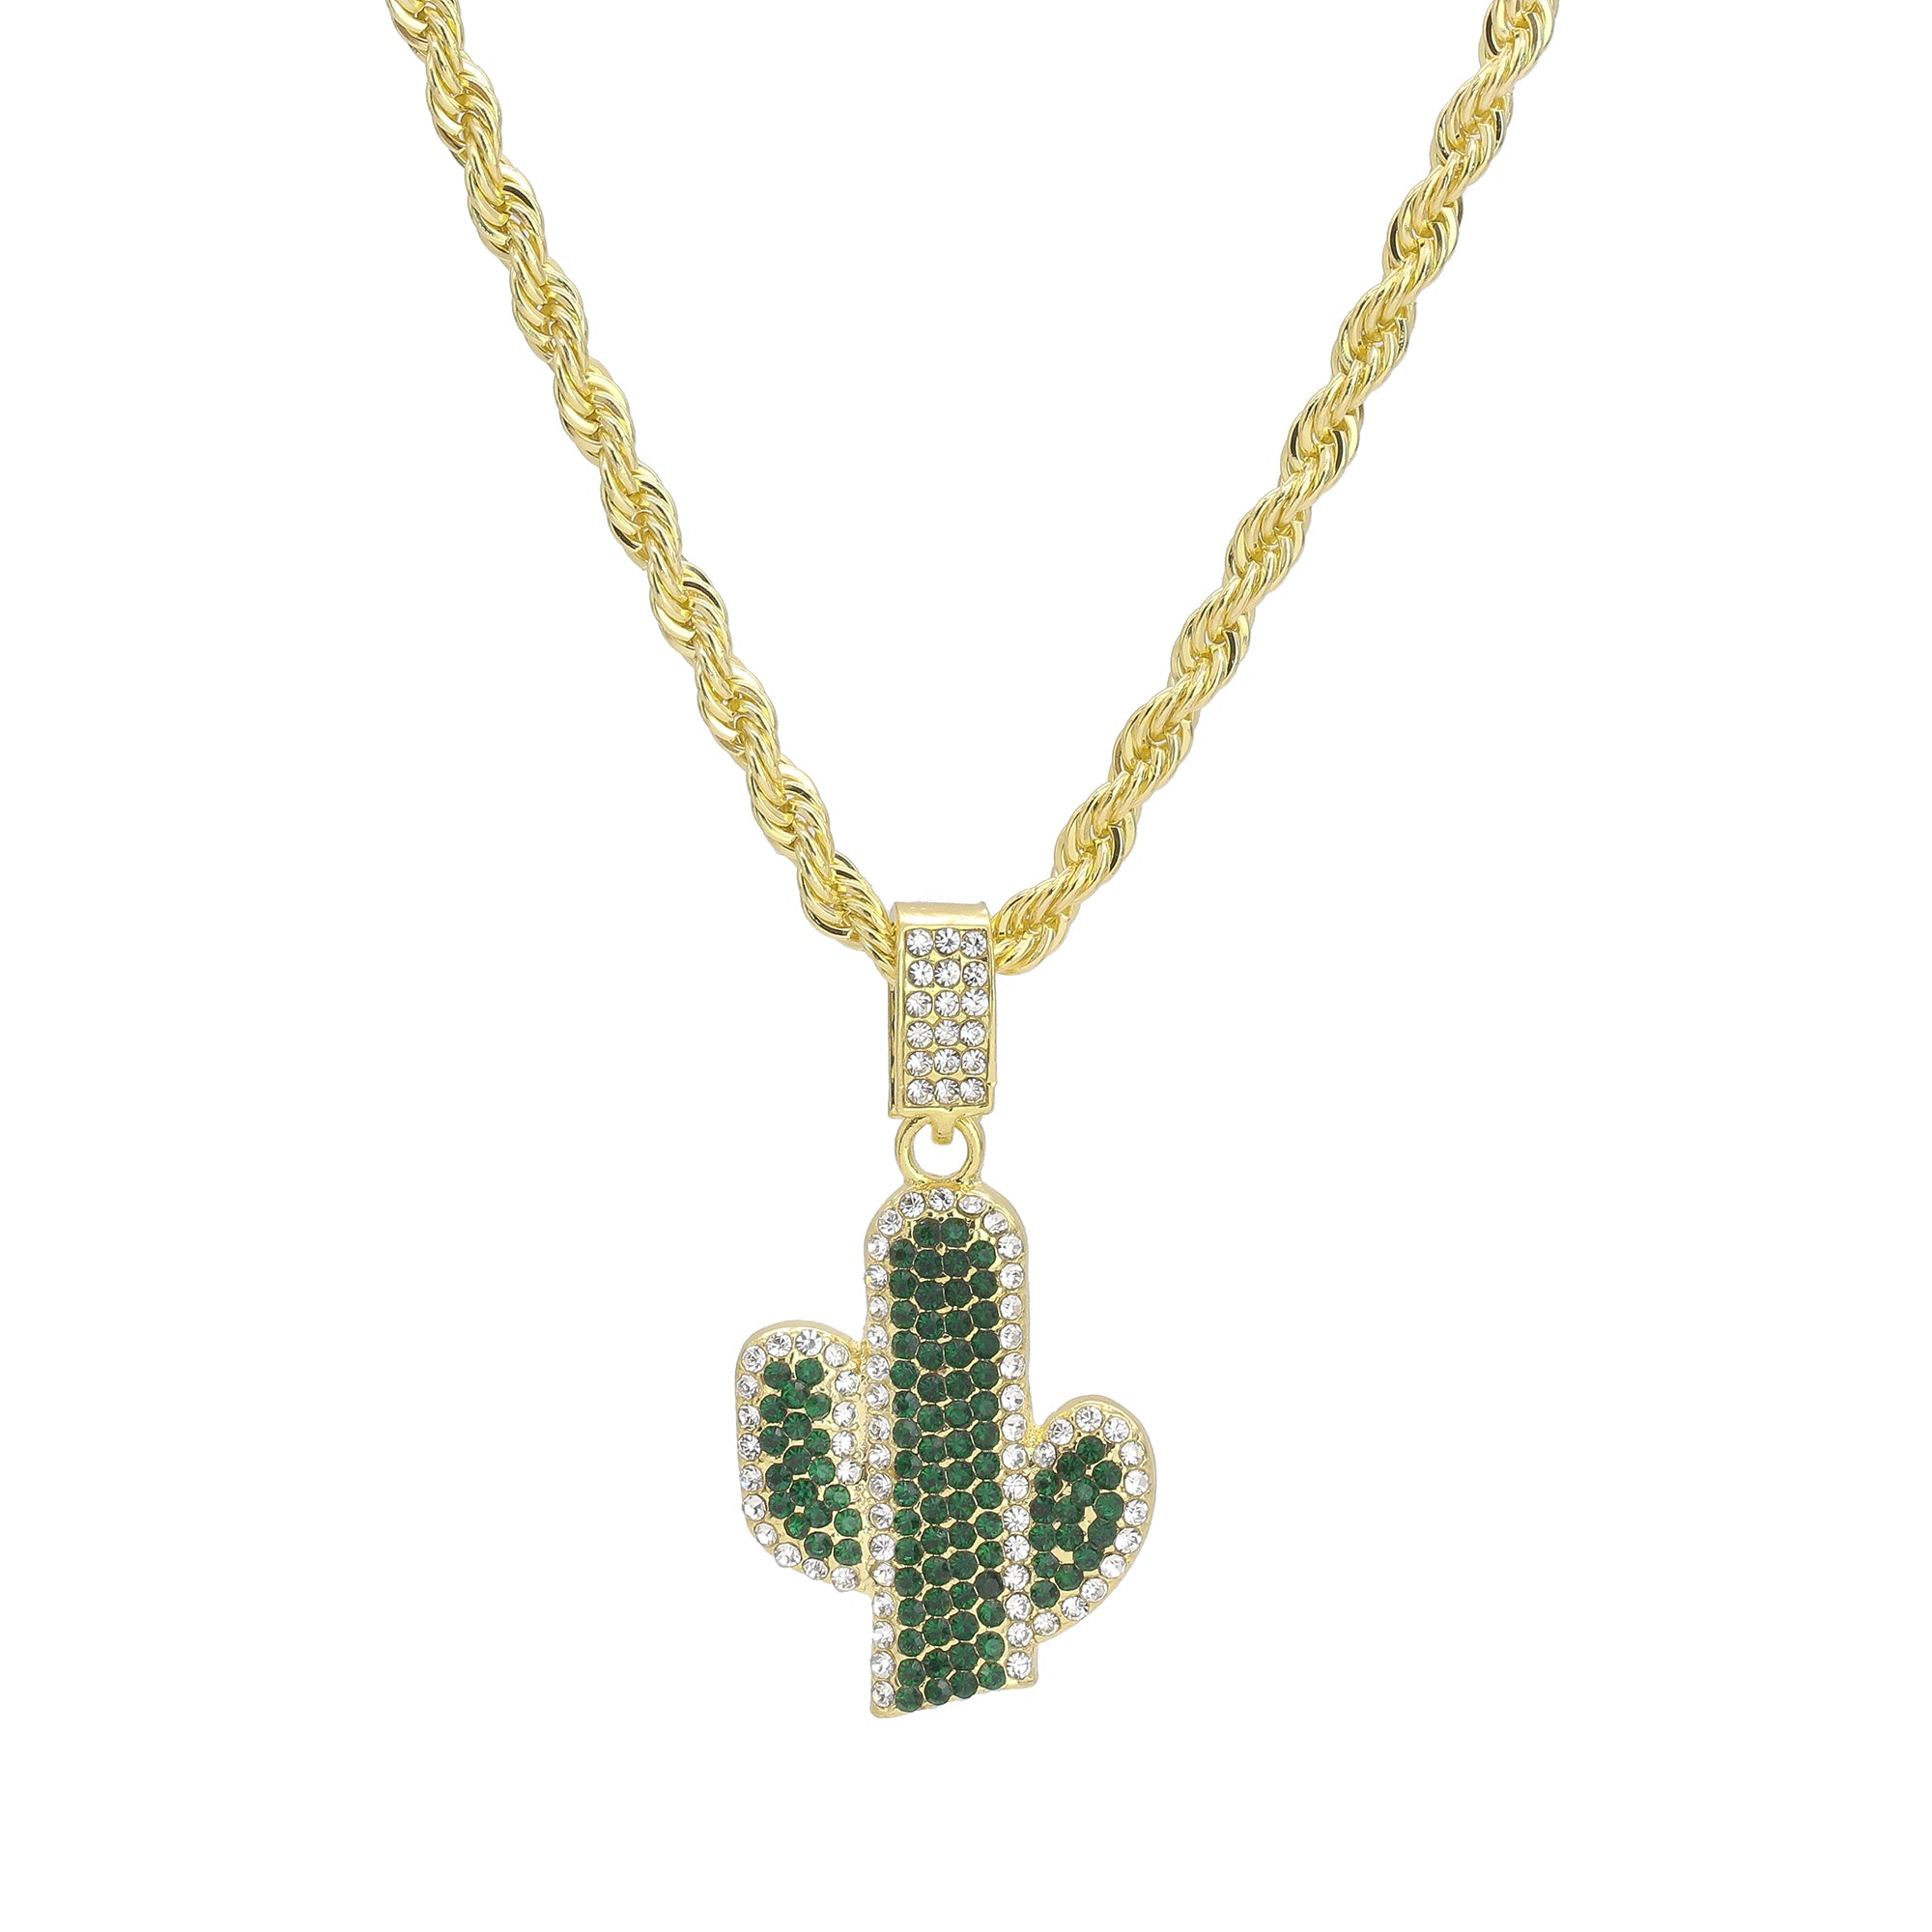 Green Cactus Cz Pendant Rope Chain Men's Hip Hop 18k Cz Jewelry